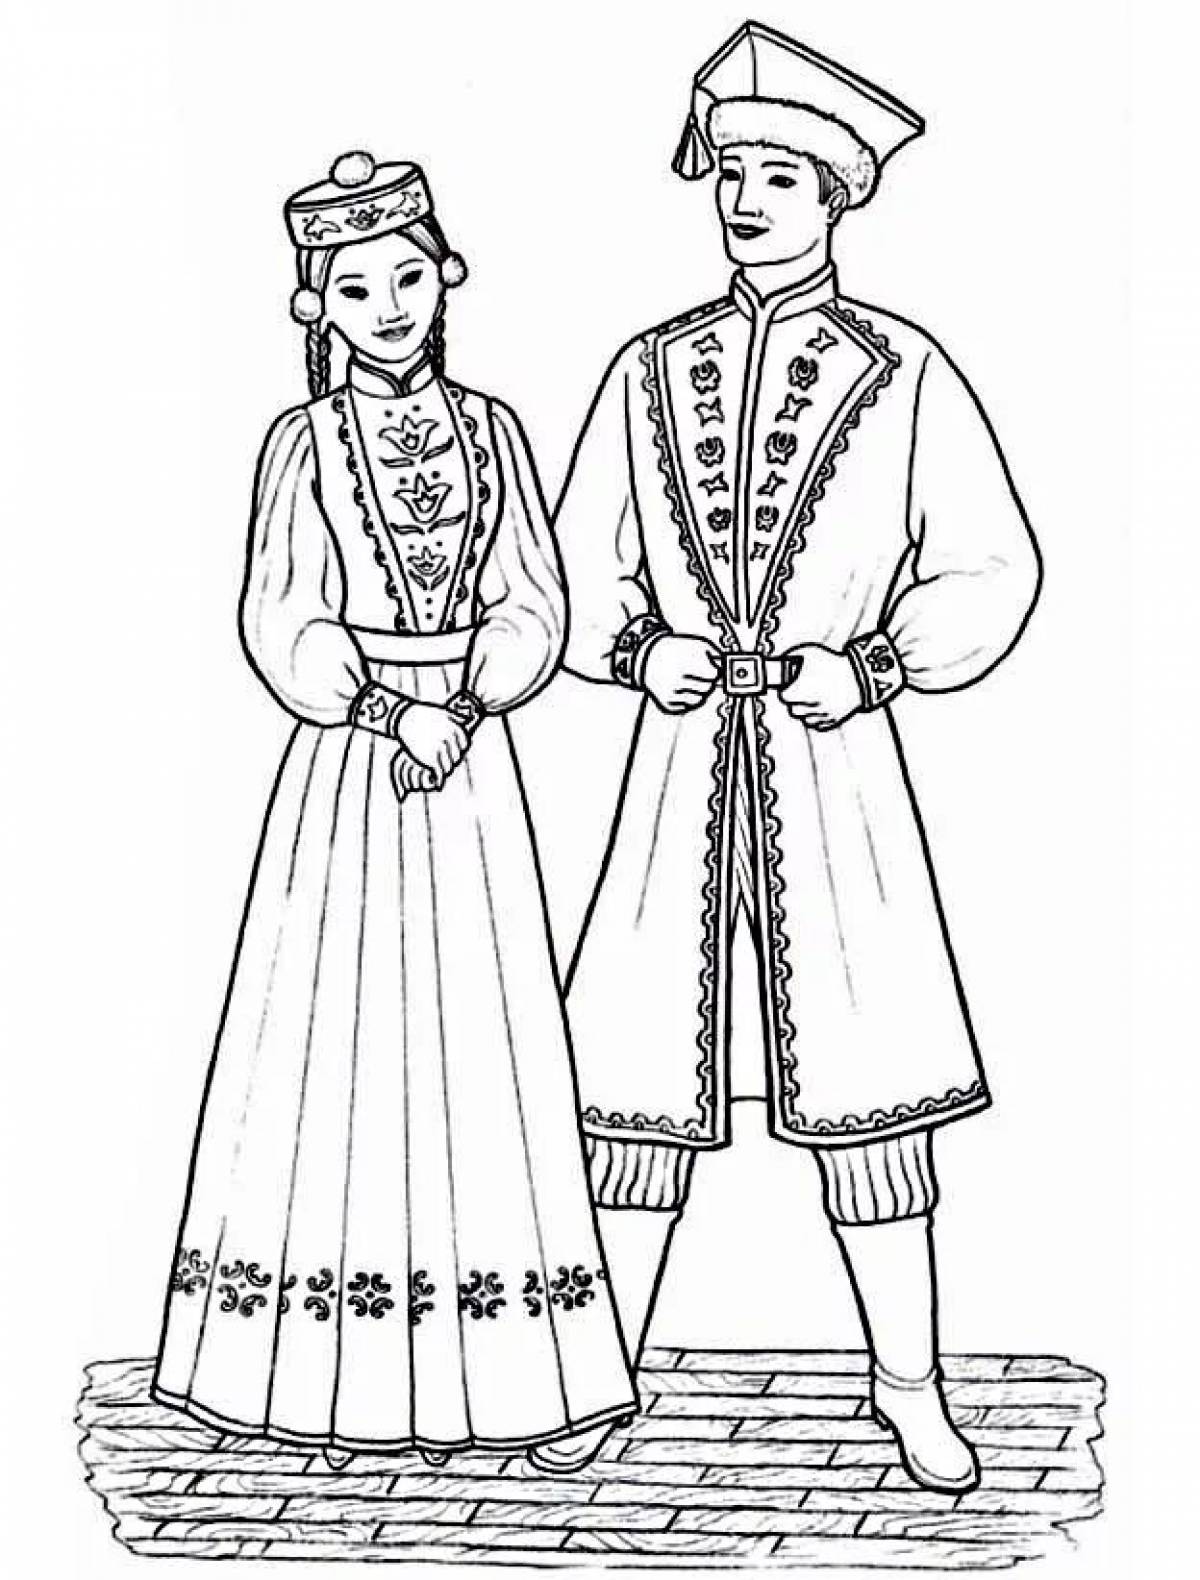 Tatar costume #2